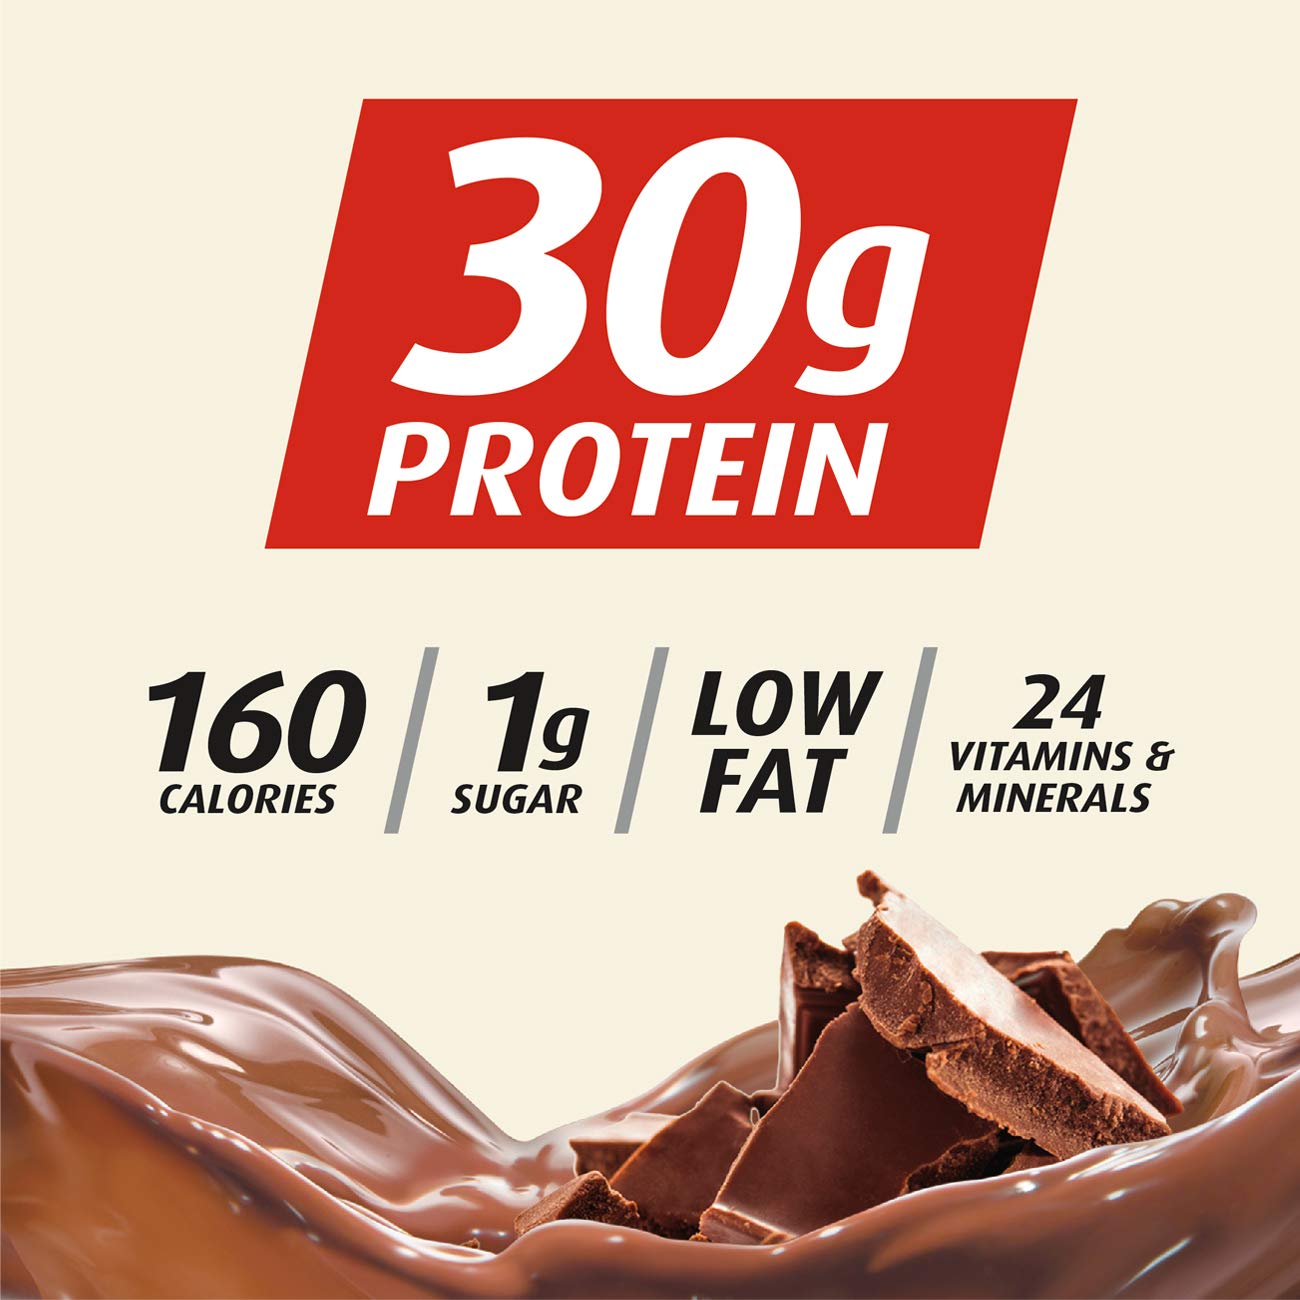 Premier Protein 30g Protein Shake, Chocolate, 11.5 Fl Oz, Pack of 12